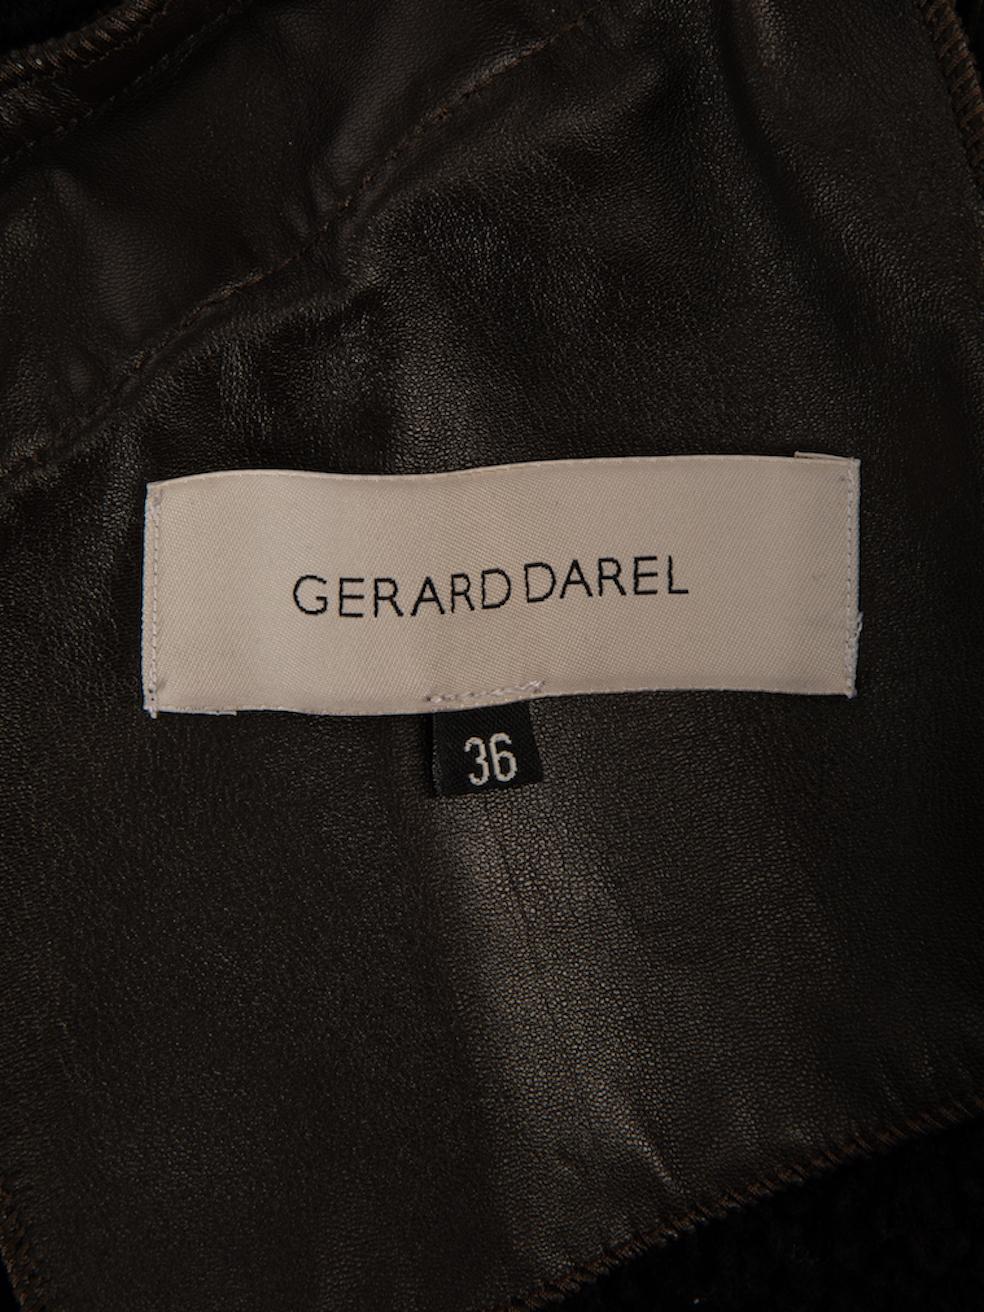 Pre-Loved Gerard Darel Women's Brown Suede Shearling Lined Jacket 1